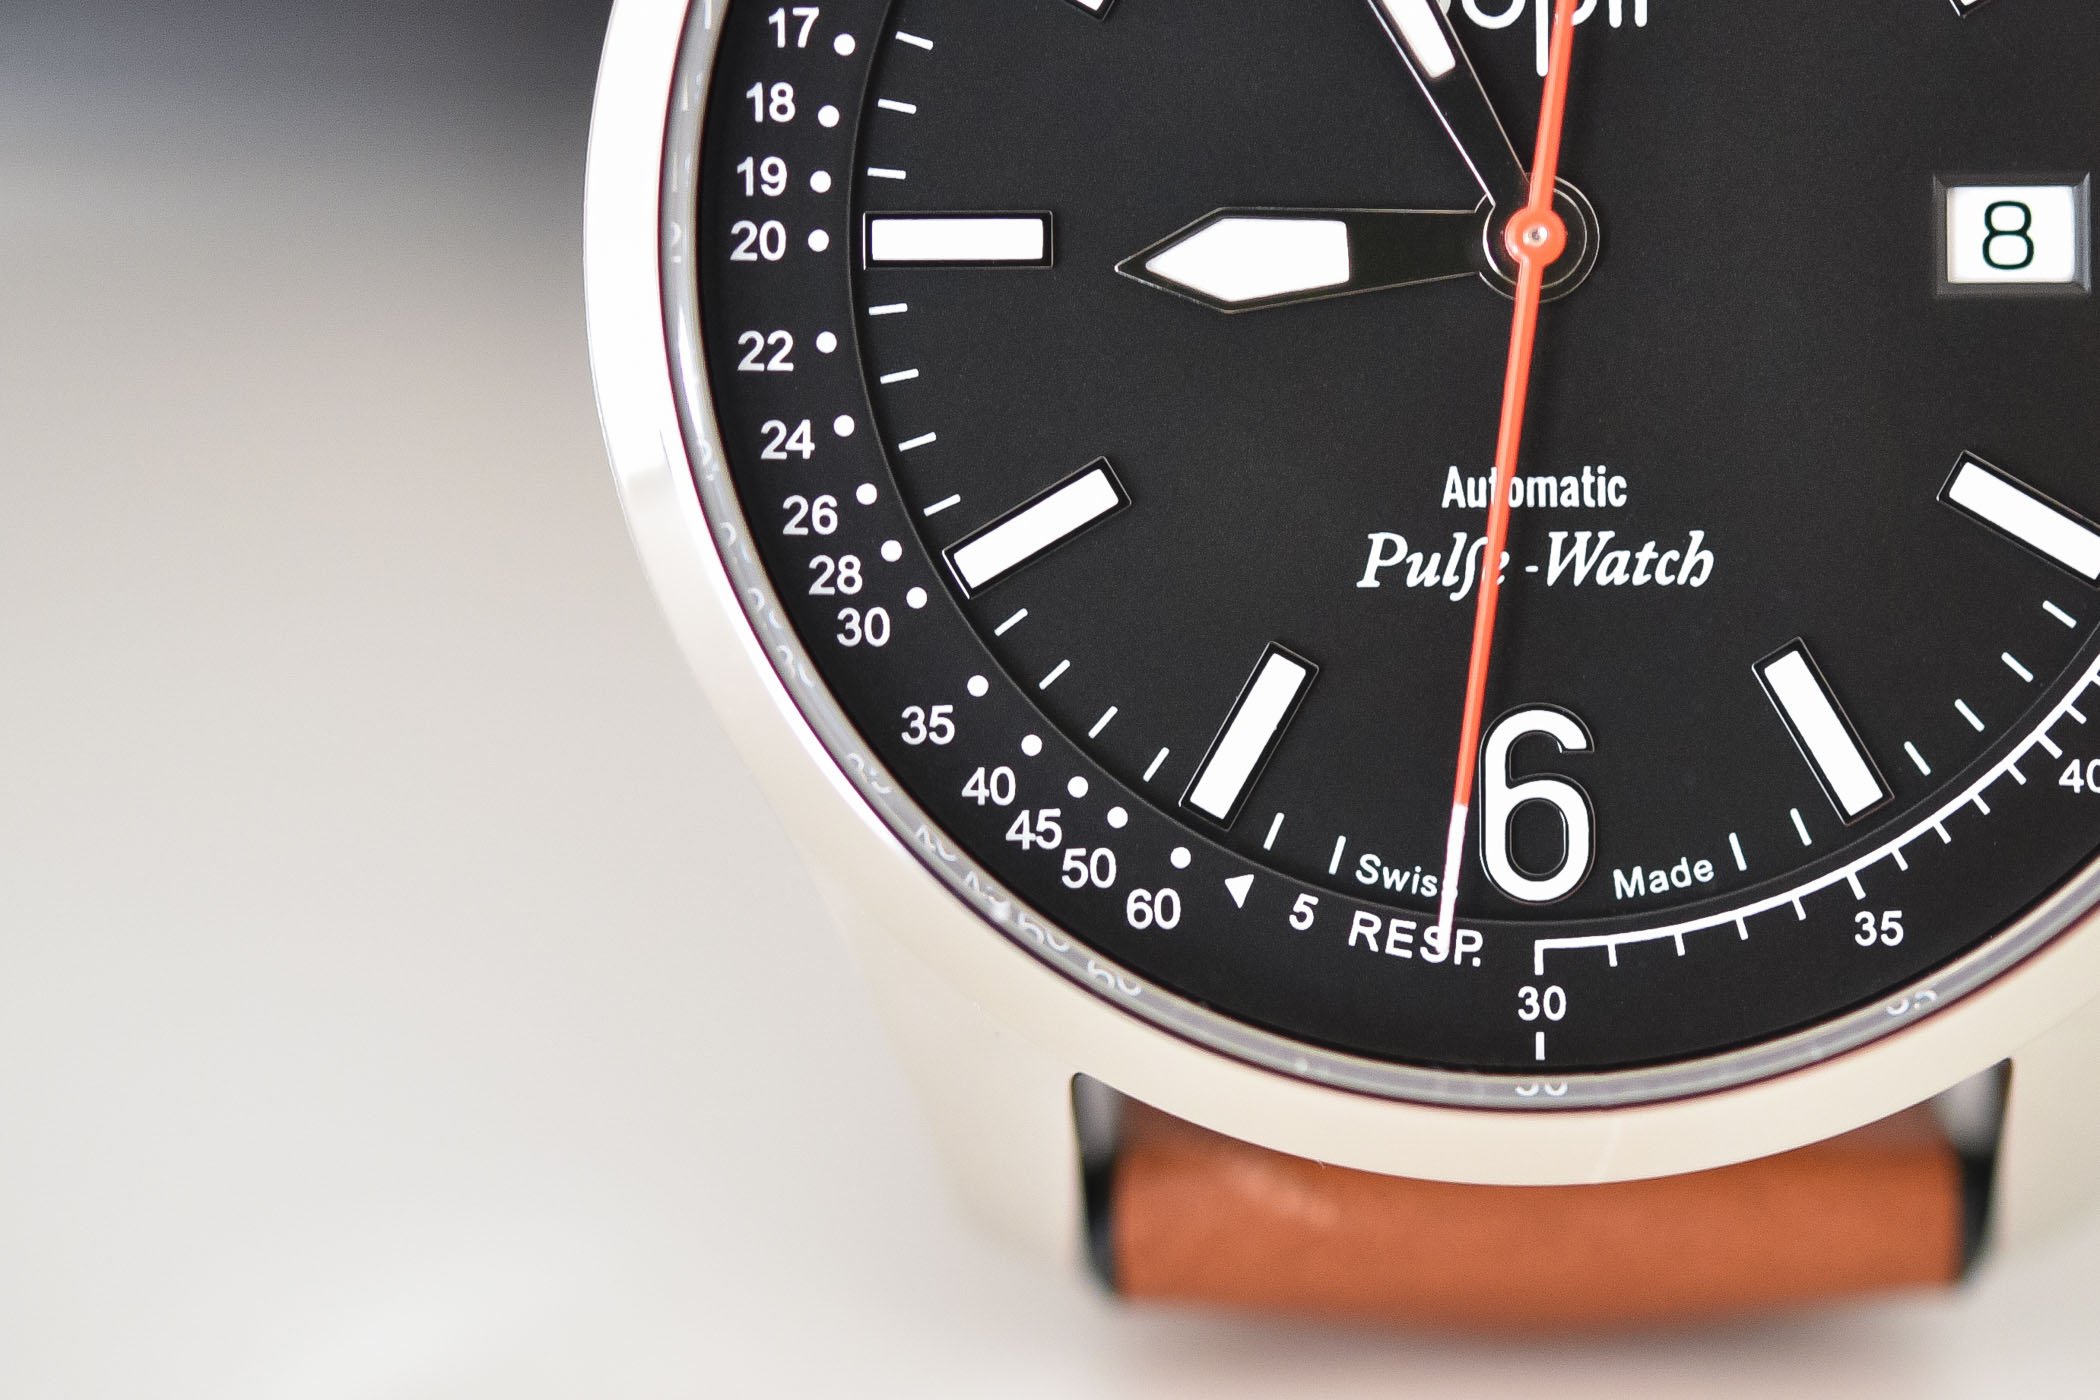 Doplr Pulse-Watch - doctor's watch pulsation dial